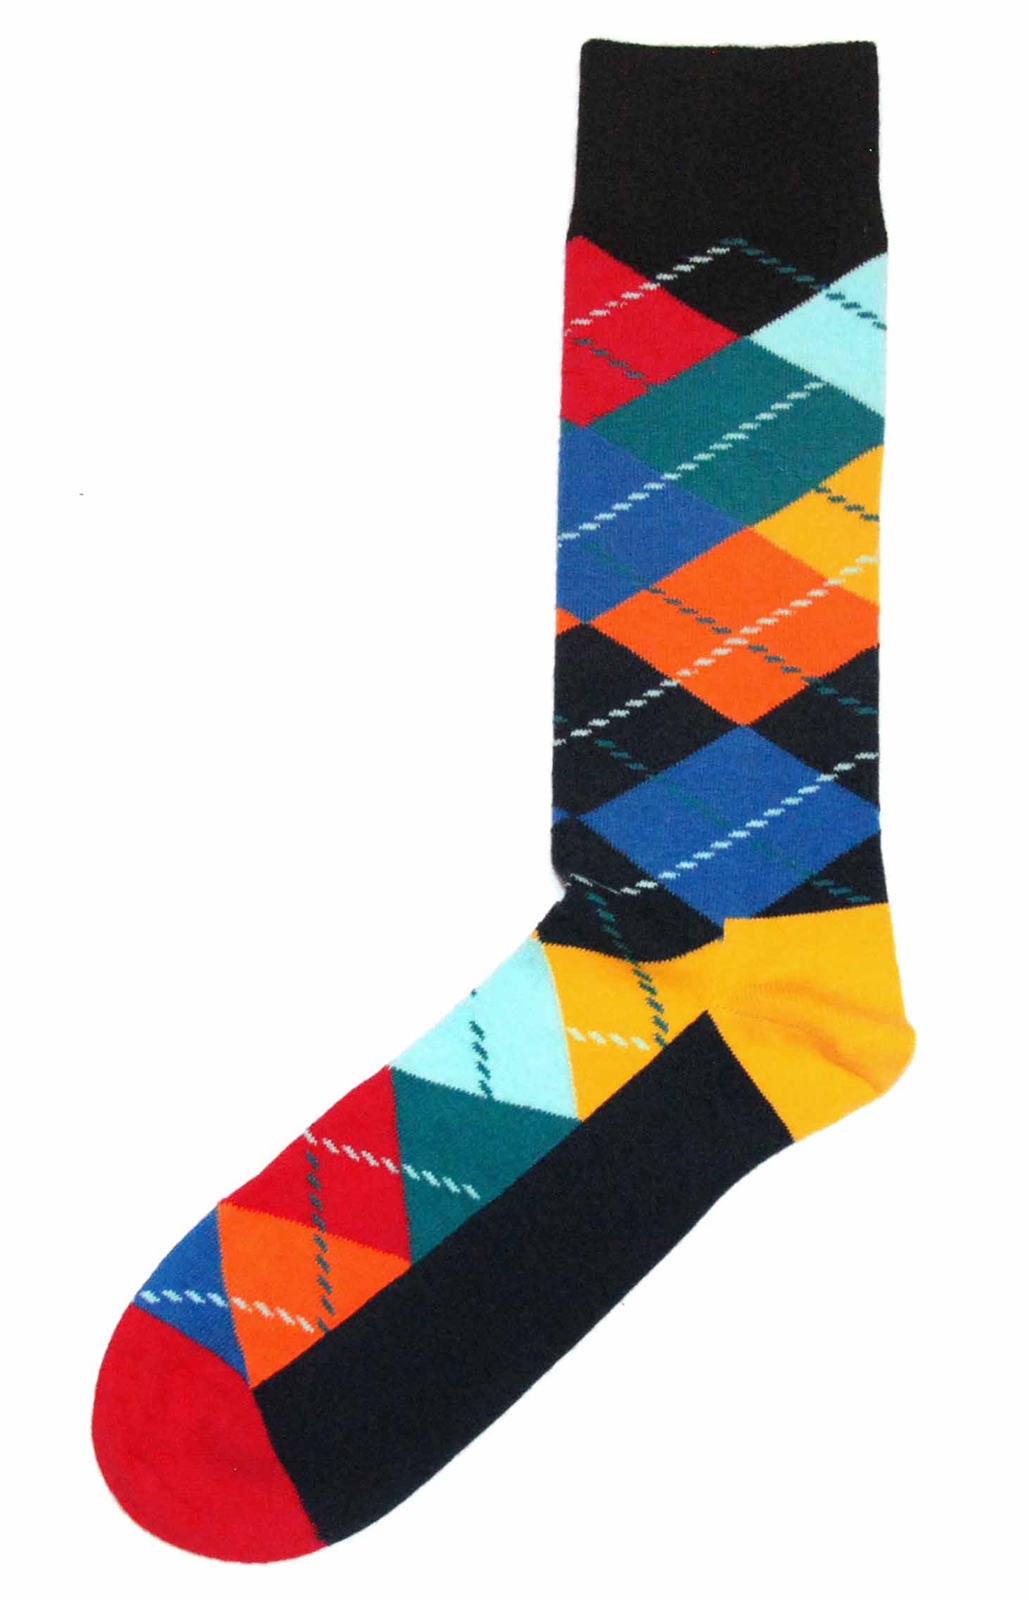 Beautiful colorful sock free image download